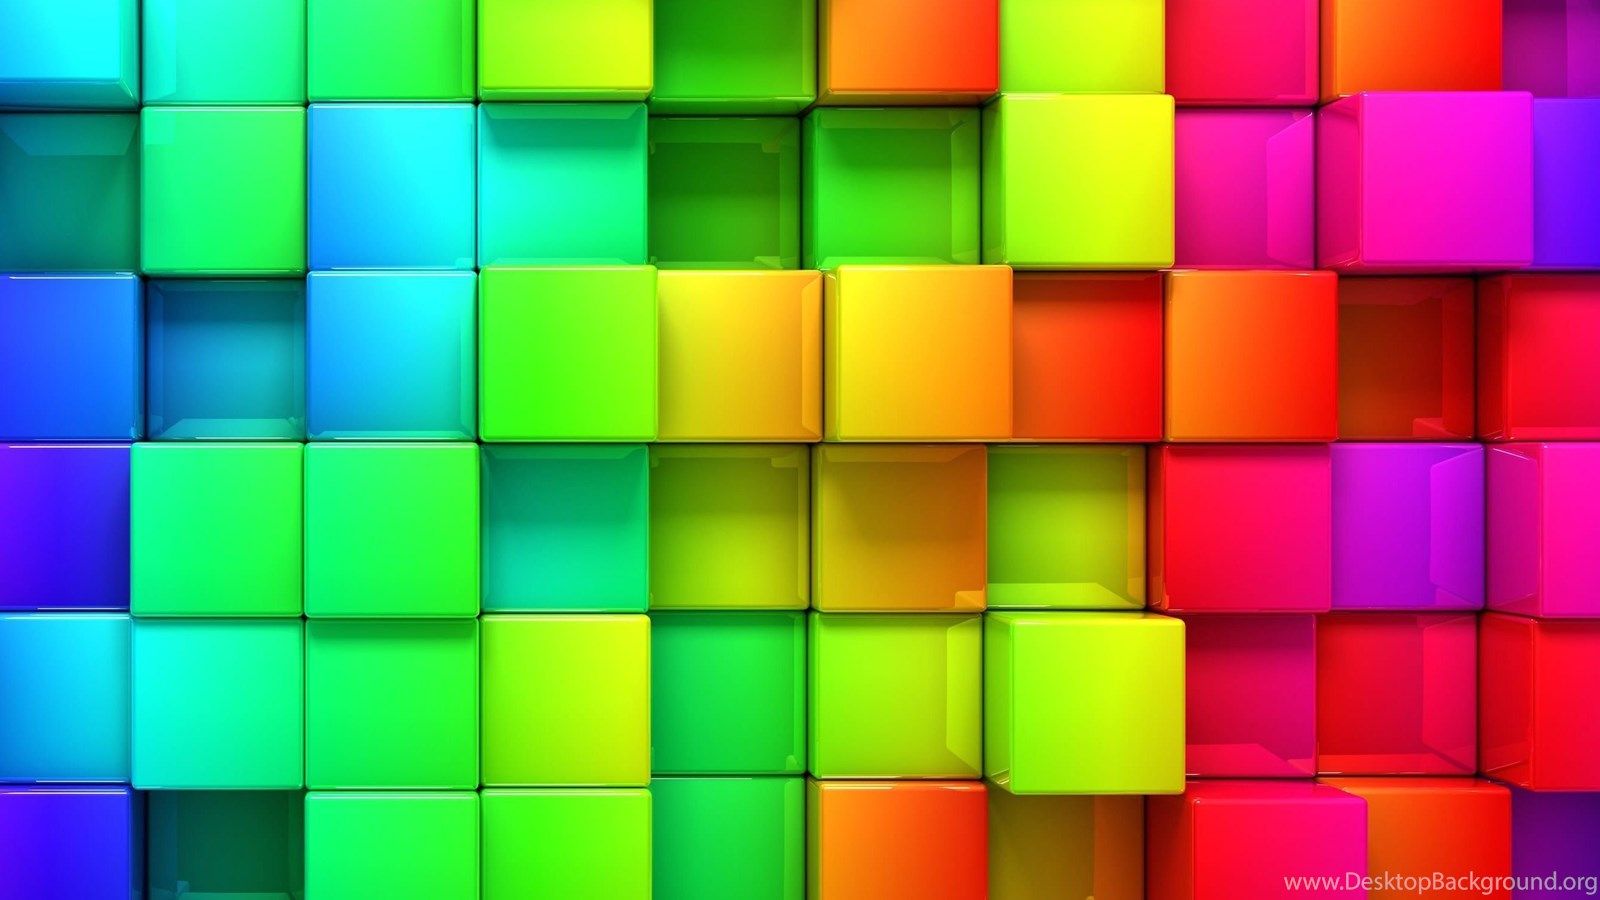 Download Cubic Rainbow HD Wallpaper For iPhone 6 Plus. Desktop Background